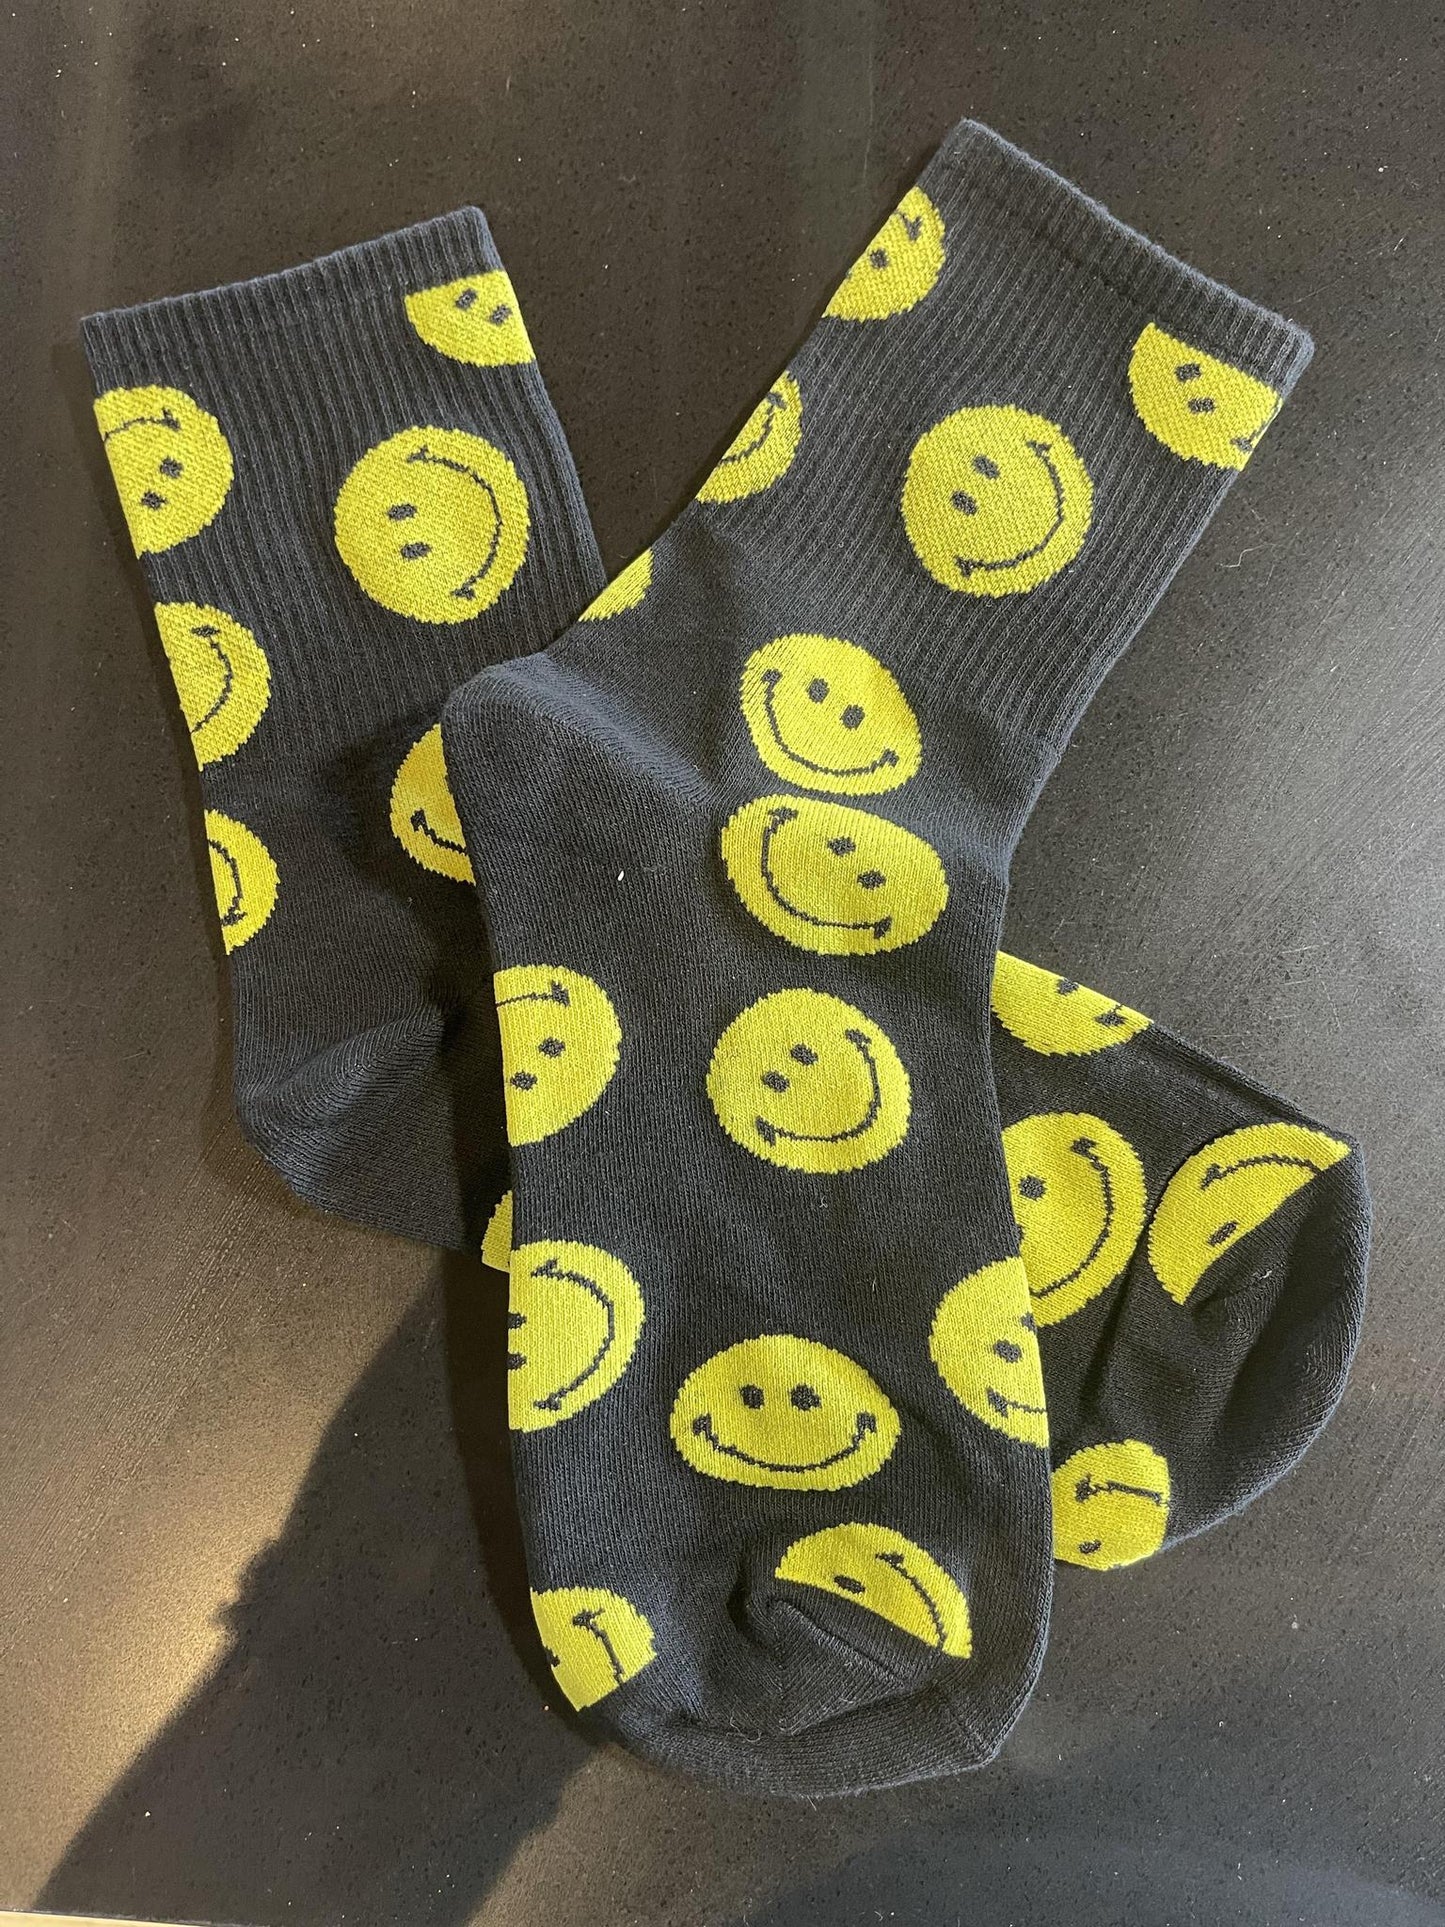 Smiley Face Socks